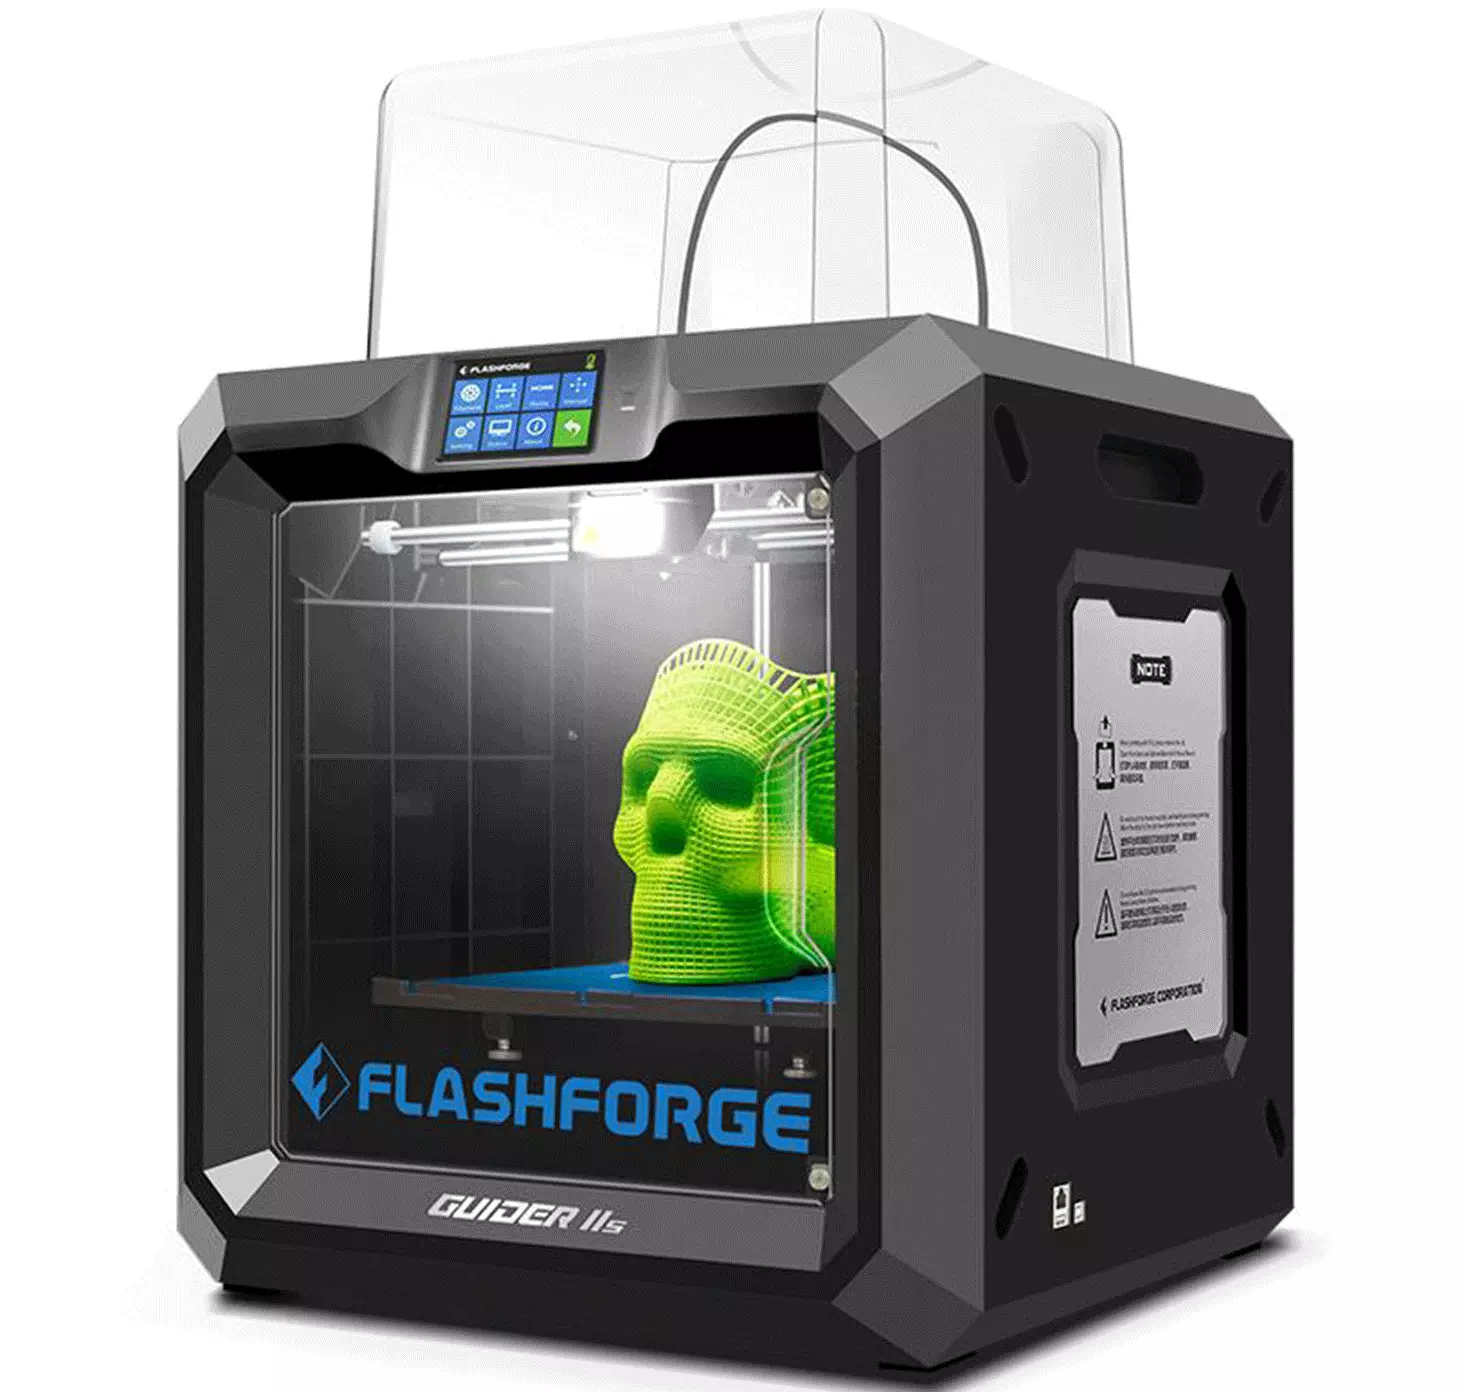 flashforge guider 2s 3d printer tech specs